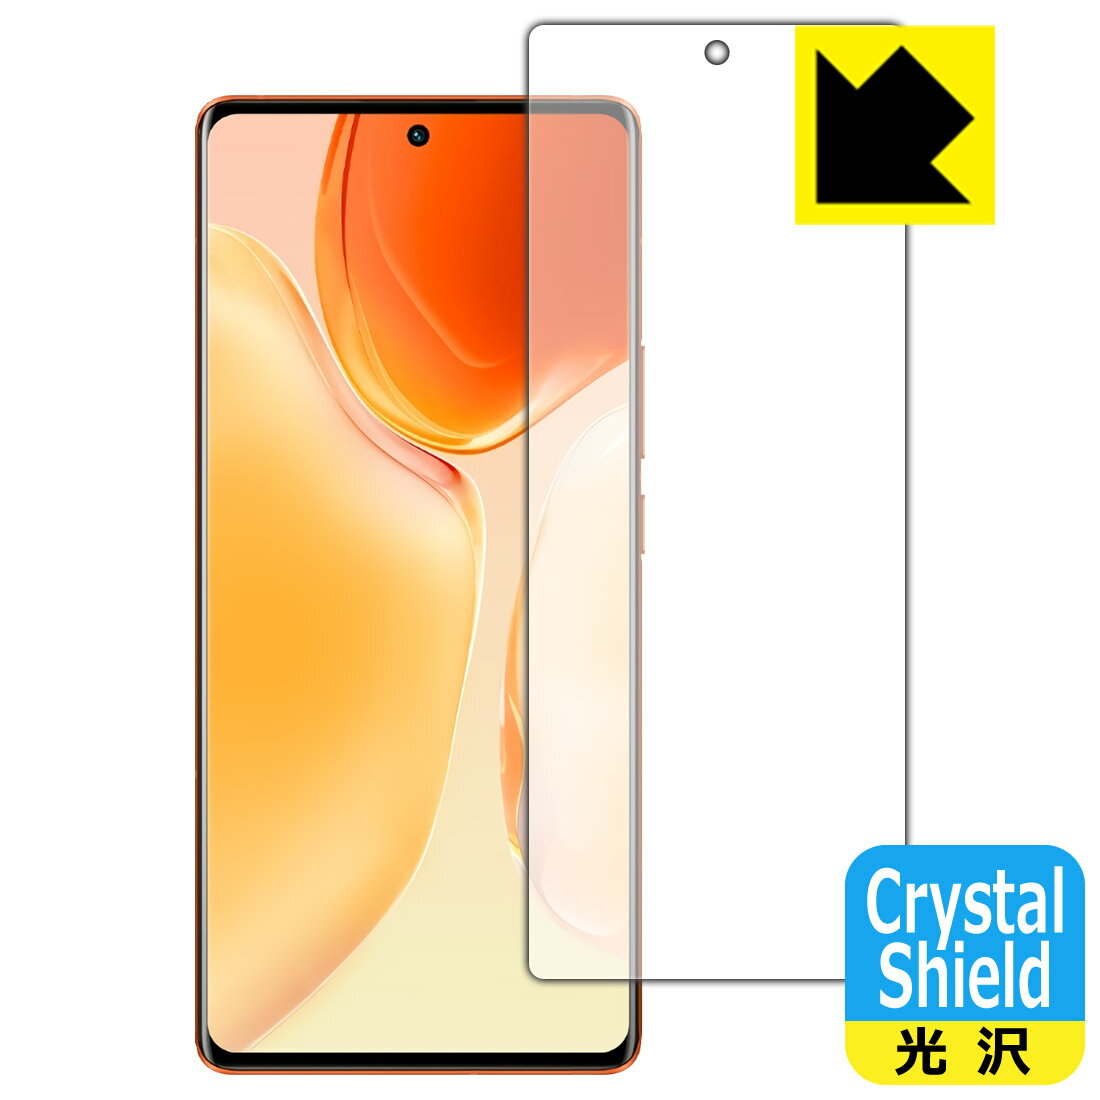 Crystal Shield vivo X70 Pro+ 【指紋認証対応】 3枚セット 日本製 自社製造直販